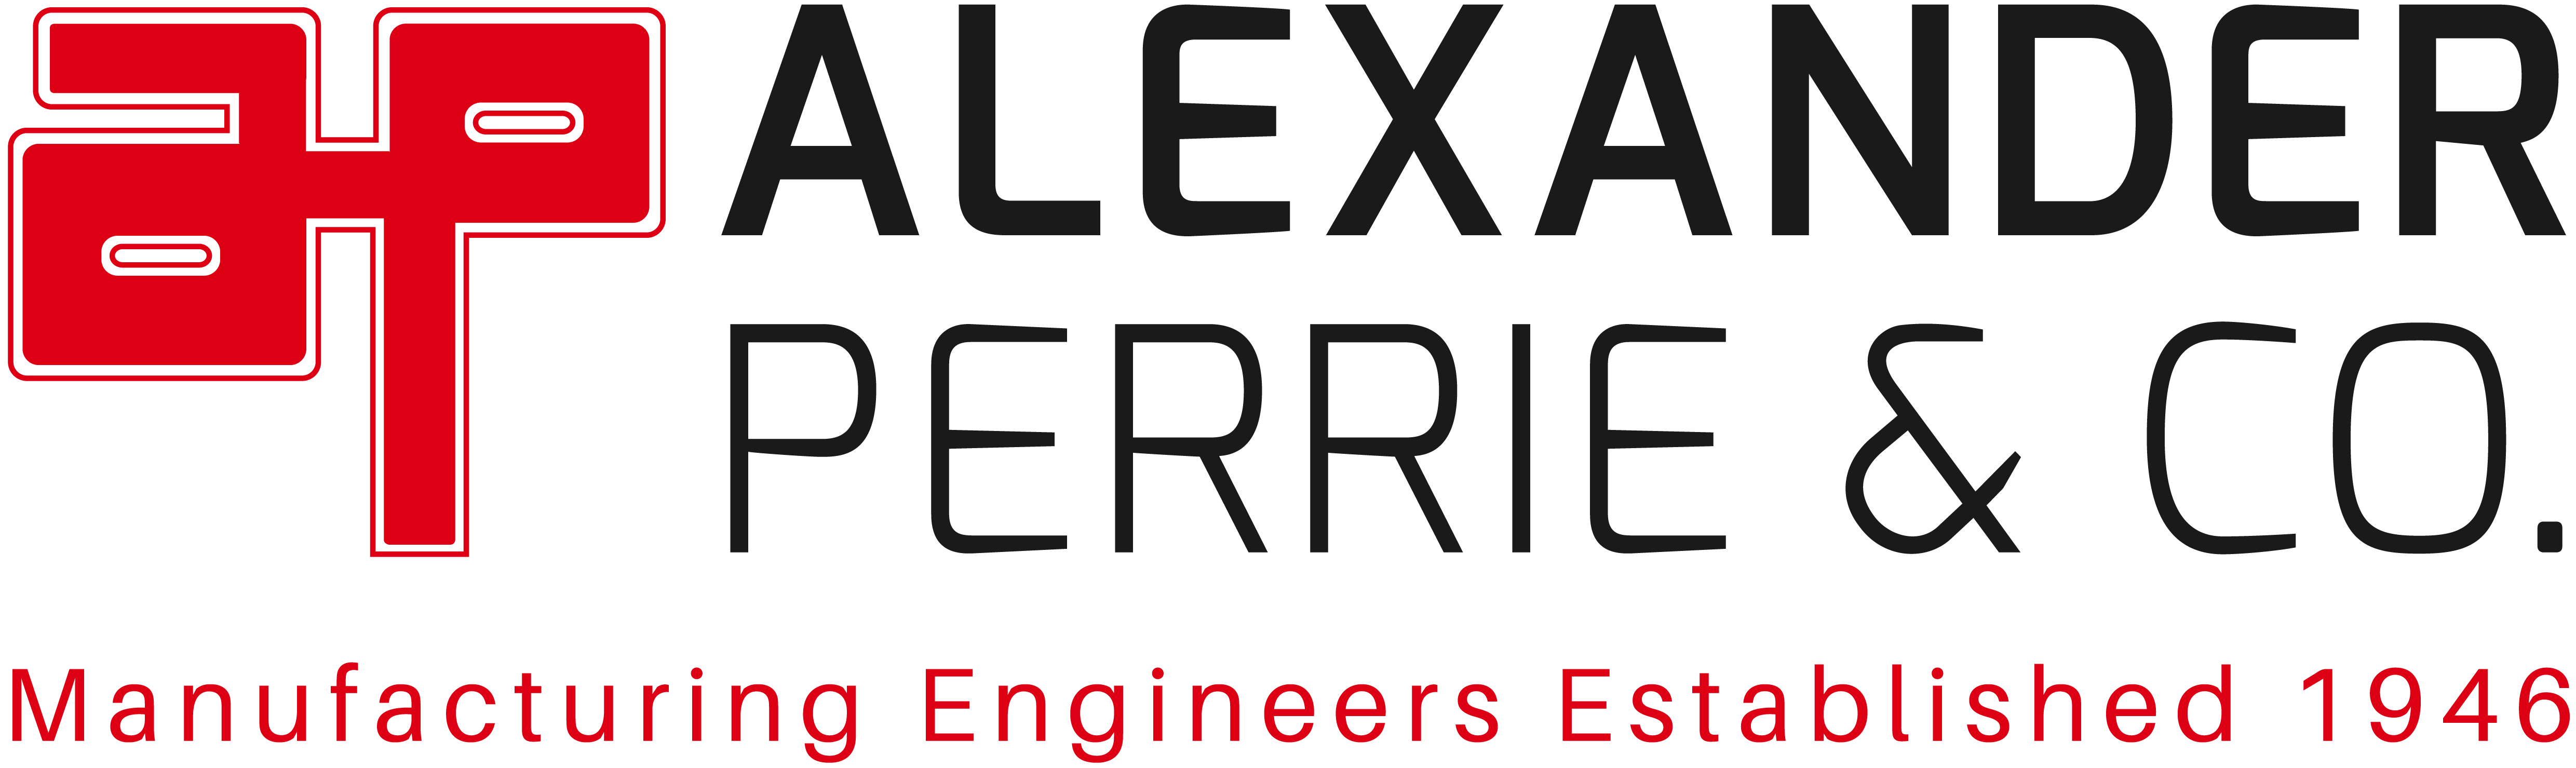 Alexander Perrie & Co. Logo